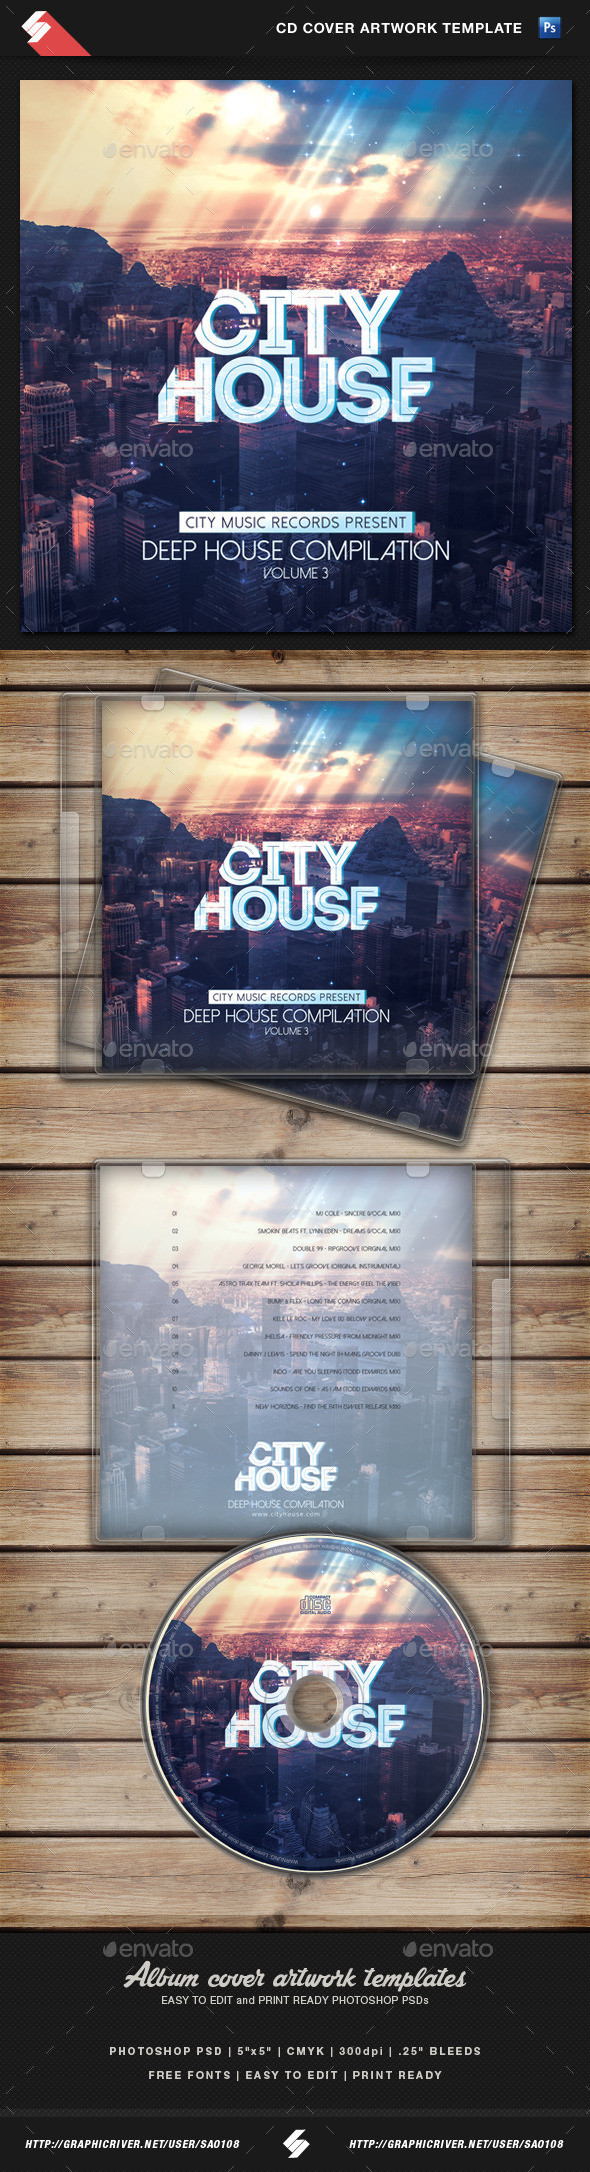 Cityhouse cd cover template preview